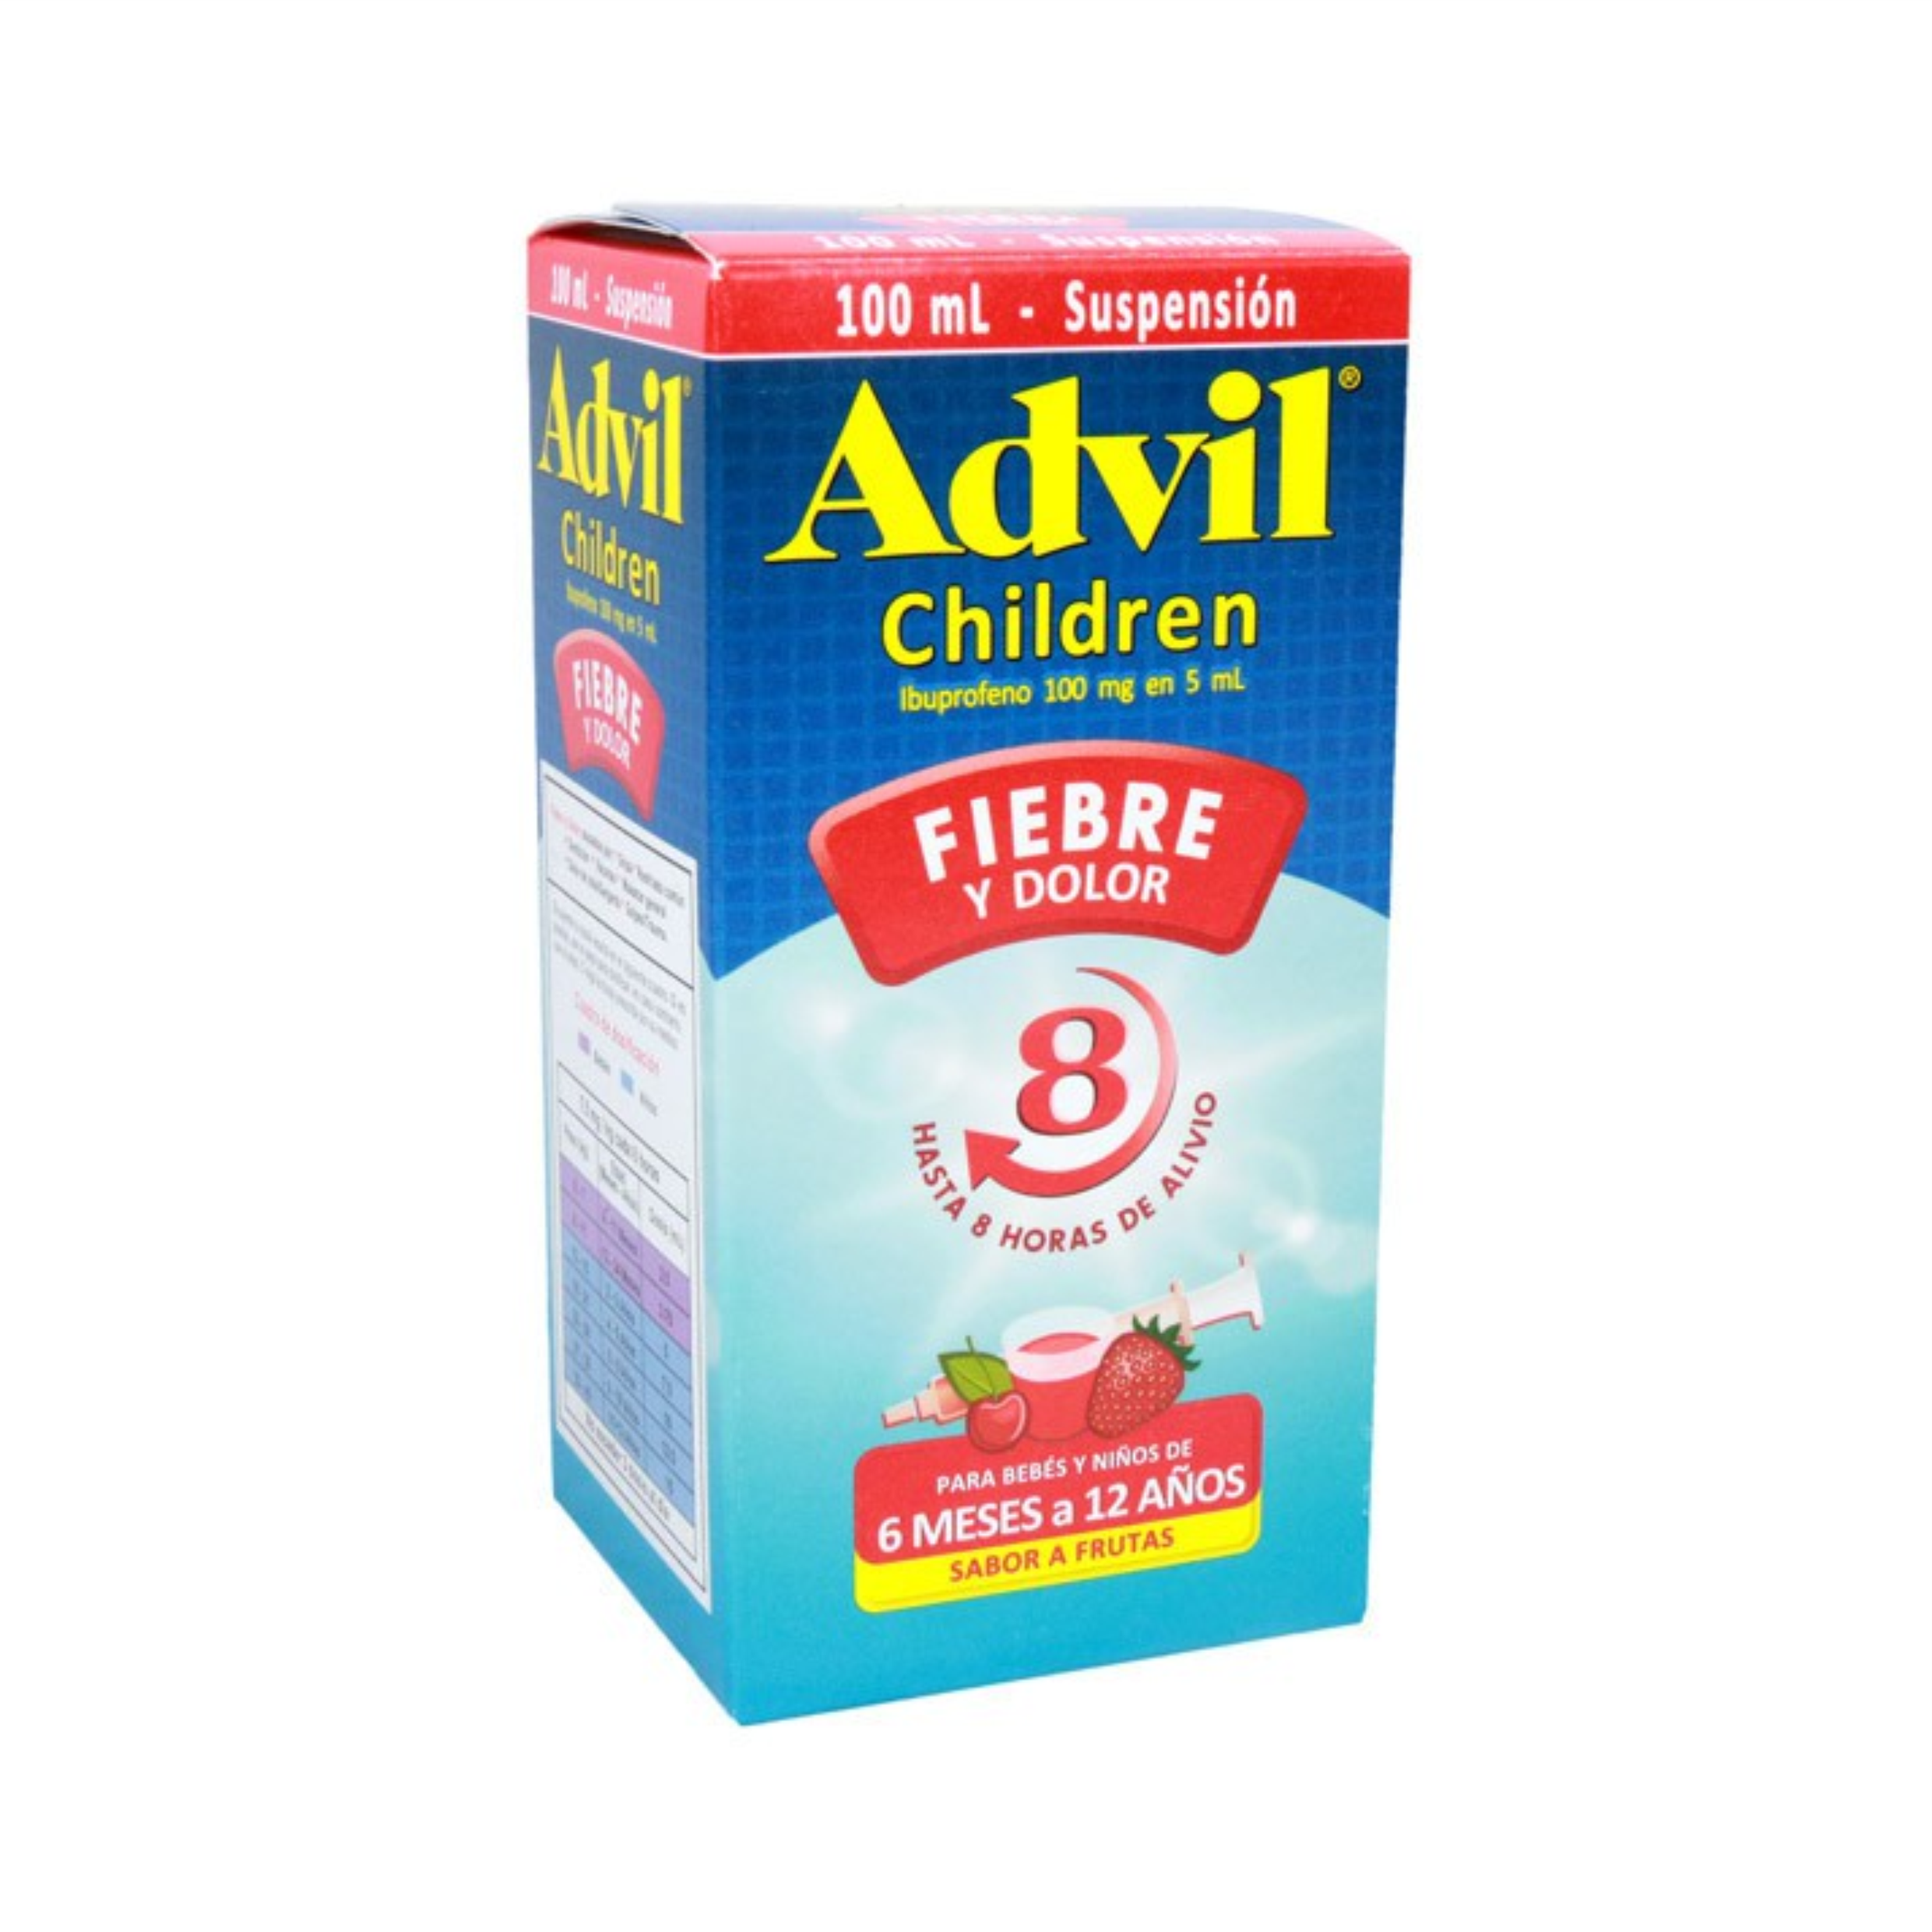 Advil Children Suspensión 100 mL